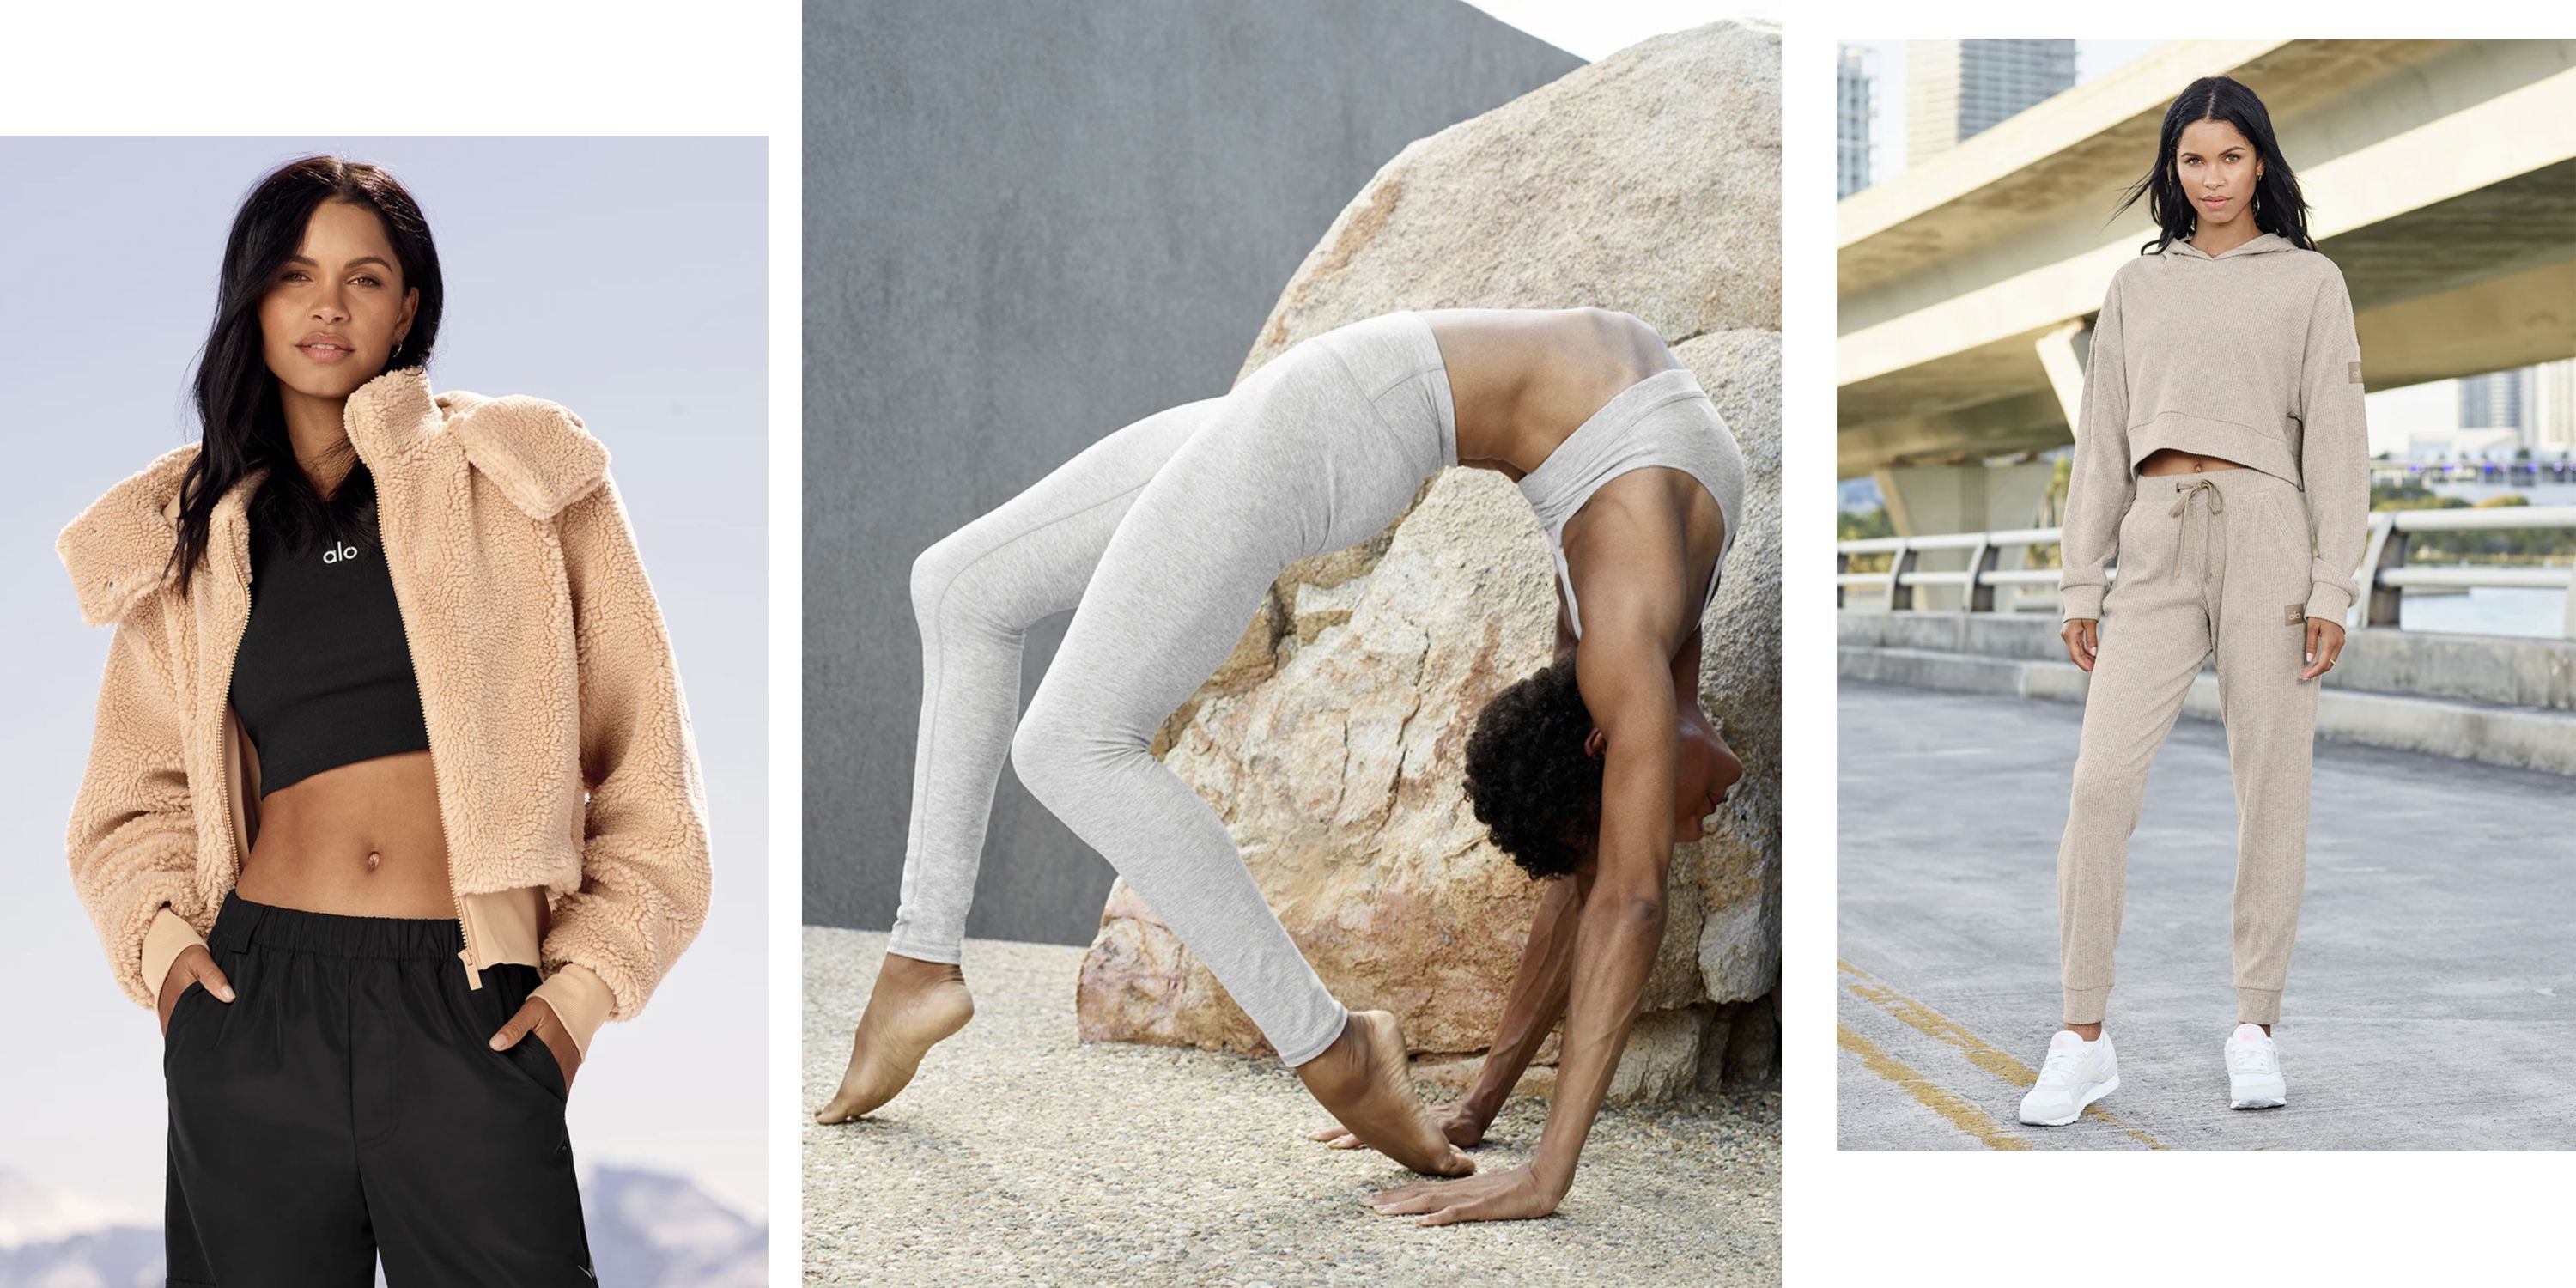 Alo Yoga Trends from Studio to Street Yoga Fashion